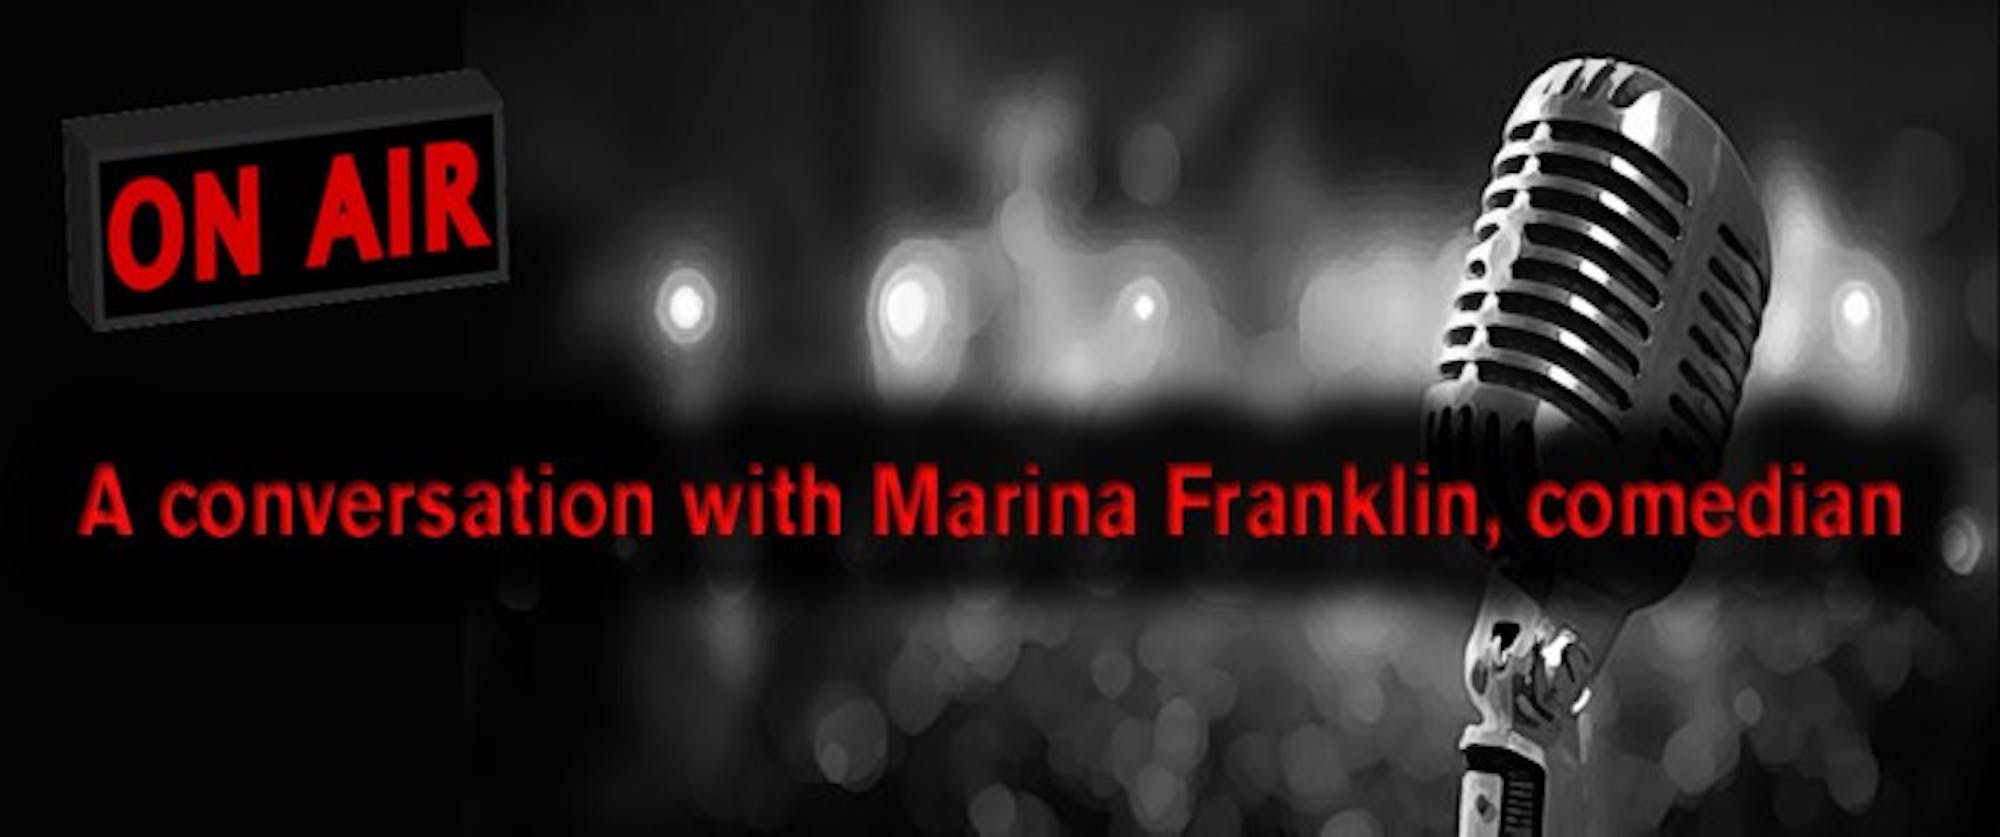 Marina Franklin_WEB